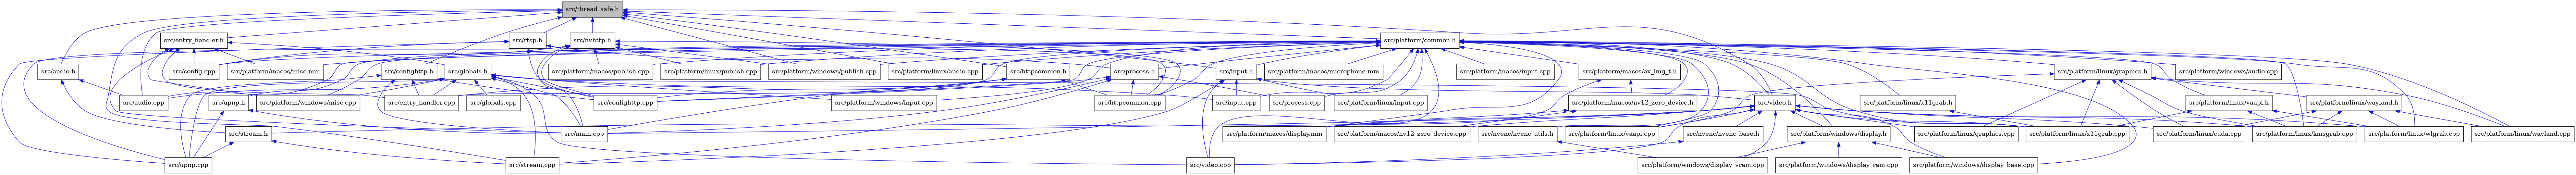 digraph {
    graph [bgcolor="#00000000"]
    node [shape=rectangle style=filled fillcolor="#FFFFFF" font=Helvetica padding=2]
    edge [color="#1414CE"]
    "13" [label="src/globals.h" tooltip="src/globals.h"]
    "30" [label="src/platform/linux/vaapi.cpp" tooltip="src/platform/linux/vaapi.cpp"]
    "11" [label="src/entry_handler.h" tooltip="src/entry_handler.h"]
    "17" [label="src/platform/windows/input.cpp" tooltip="src/platform/windows/input.cpp"]
    "32" [label="src/platform/macos/display.mm" tooltip="src/platform/macos/display.mm"]
    "58" [label="src/rtsp.h" tooltip="src/rtsp.h"]
    "9" [label="src/entry_handler.cpp" tooltip="src/entry_handler.cpp"]
    "55" [label="src/process.cpp" tooltip="src/process.cpp"]
    "29" [label="src/platform/linux/kmsgrab.cpp" tooltip="src/platform/linux/kmsgrab.cpp"]
    "50" [label="src/platform/macos/av_img_t.h" tooltip="src/platform/macos/av_img_t.h"]
    "7" [label="src/confighttp.h" tooltip="src/confighttp.h"]
    "43" [label="src/nvenc/nvenc_utils.h" tooltip="src/nvenc/nvenc_utils.h"]
    "53" [label="src/platform/macos/input.cpp" tooltip="src/platform/macos/input.cpp"]
    "31" [label="src/platform/linux/wlgrab.cpp" tooltip="src/platform/linux/wlgrab.cpp"]
    "51" [label="src/platform/macos/nv12_zero_device.h" tooltip="src/platform/macos/nv12_zero_device.h"]
    "44" [label="src/platform/linux/audio.cpp" tooltip="src/platform/linux/audio.cpp"]
    "12" [label="src/config.cpp" tooltip="src/config.cpp"]
    "15" [label="src/input.cpp" tooltip="src/input.cpp"]
    "8" [label="src/confighttp.cpp" tooltip="src/confighttp.cpp"]
    "19" [label="src/video.cpp" tooltip="src/video.cpp"]
    "57" [label="src/upnp.h" tooltip="src/upnp.h"]
    "49" [label="src/platform/linux/x11grab.h" tooltip="src/platform/linux/x11grab.h"]
    "33" [label="src/platform/macos/nv12_zero_device.cpp" tooltip="src/platform/macos/nv12_zero_device.cpp"]
    "23" [label="src/input.h" tooltip="src/input.h"]
    "26" [label="src/nvenc/nvenc_base.h" tooltip="src/nvenc/nvenc_base.h"]
    "39" [label="src/platform/linux/publish.cpp" tooltip="src/platform/linux/publish.cpp"]
    "45" [label="src/platform/linux/graphics.h" tooltip="src/platform/linux/graphics.h"]
    "6" [label="src/upnp.cpp" tooltip="src/upnp.cpp"]
    "2" [label="src/audio.h" tooltip="src/audio.h"]
    "24" [label="src/platform/linux/input.cpp" tooltip="src/platform/linux/input.cpp"]
    "28" [label="src/platform/linux/cuda.cpp" tooltip="src/platform/linux/cuda.cpp"]
    "25" [label="src/video.h" tooltip="src/video.h"]
    "5" [label="src/stream.cpp" tooltip="src/stream.cpp"]
    "48" [label="src/platform/linux/vaapi.h" tooltip="src/platform/linux/vaapi.h"]
    "22" [label="src/httpcommon.cpp" tooltip="src/httpcommon.cpp"]
    "3" [label="src/audio.cpp" tooltip="src/audio.cpp"]
    "35" [label="src/platform/windows/display_ram.cpp" tooltip="src/platform/windows/display_ram.cpp"]
    "1" [label="src/thread_safe.h" tooltip="src/thread_safe.h" fillcolor="#BFBFBF"]
    "27" [label="src/platform/linux/graphics.cpp" tooltip="src/platform/linux/graphics.cpp"]
    "47" [label="src/platform/linux/wayland.cpp" tooltip="src/platform/linux/wayland.cpp"]
    "54" [label="src/platform/windows/audio.cpp" tooltip="src/platform/windows/audio.cpp"]
    "38" [label="src/nvhttp.h" tooltip="src/nvhttp.h"]
    "41" [label="src/platform/windows/publish.cpp" tooltip="src/platform/windows/publish.cpp"]
    "40" [label="src/platform/macos/publish.cpp" tooltip="src/platform/macos/publish.cpp"]
    "56" [label="src/process.h" tooltip="src/process.h"]
    "14" [label="src/globals.cpp" tooltip="src/globals.cpp"]
    "42" [label="src/platform/common.h" tooltip="src/platform/common.h"]
    "37" [label="src/platform/windows/display_vram.cpp" tooltip="src/platform/windows/display_vram.cpp"]
    "18" [label="src/platform/windows/misc.cpp" tooltip="src/platform/windows/misc.cpp"]
    "36" [label="src/platform/windows/display_base.cpp" tooltip="src/platform/windows/display_base.cpp"]
    "46" [label="src/platform/linux/wayland.h" tooltip="src/platform/linux/wayland.h"]
    "20" [label="src/platform/macos/misc.mm" tooltip="src/platform/macos/misc.mm"]
    "21" [label="src/httpcommon.h" tooltip="src/httpcommon.h"]
    "16" [label="src/platform/linux/x11grab.cpp" tooltip="src/platform/linux/x11grab.cpp"]
    "4" [label="src/stream.h" tooltip="src/stream.h"]
    "10" [label="src/main.cpp" tooltip="src/main.cpp"]
    "52" [label="src/platform/macos/microphone.mm" tooltip="src/platform/macos/microphone.mm"]
    "34" [label="src/platform/windows/display.h" tooltip="src/platform/windows/display.h"]
    "13" -> "3" [dir=back tooltip="include"]
    "13" -> "8" [dir=back tooltip="include"]
    "13" -> "9" [dir=back tooltip="include"]
    "13" -> "14" [dir=back tooltip="include"]
    "13" -> "15" [dir=back tooltip="include"]
    "13" -> "10" [dir=back tooltip="include"]
    "13" -> "16" [dir=back tooltip="include"]
    "13" -> "17" [dir=back tooltip="include"]
    "13" -> "18" [dir=back tooltip="include"]
    "13" -> "5" [dir=back tooltip="include"]
    "13" -> "6" [dir=back tooltip="include"]
    "13" -> "19" [dir=back tooltip="include"]
    "11" -> "12" [dir=back tooltip="include"]
    "11" -> "9" [dir=back tooltip="include"]
    "11" -> "13" [dir=back tooltip="include"]
    "11" -> "10" [dir=back tooltip="include"]
    "11" -> "20" [dir=back tooltip="include"]
    "11" -> "18" [dir=back tooltip="include"]
    "58" -> "12" [dir=back tooltip="include"]
    "58" -> "8" [dir=back tooltip="include"]
    "58" -> "22" [dir=back tooltip="include"]
    "58" -> "56" [dir=back tooltip="include"]
    "58" -> "6" [dir=back tooltip="include"]
    "50" -> "32" [dir=back tooltip="include"]
    "50" -> "51" [dir=back tooltip="include"]
    "7" -> "8" [dir=back tooltip="include"]
    "7" -> "9" [dir=back tooltip="include"]
    "7" -> "10" [dir=back tooltip="include"]
    "7" -> "6" [dir=back tooltip="include"]
    "43" -> "37" [dir=back tooltip="include"]
    "51" -> "32" [dir=back tooltip="include"]
    "51" -> "33" [dir=back tooltip="include"]
    "57" -> "10" [dir=back tooltip="include"]
    "57" -> "6" [dir=back tooltip="include"]
    "49" -> "16" [dir=back tooltip="include"]
    "23" -> "15" [dir=back tooltip="include"]
    "23" -> "24" [dir=back tooltip="include"]
    "23" -> "5" [dir=back tooltip="include"]
    "23" -> "25" [dir=back tooltip="include"]
    "23" -> "19" [dir=back tooltip="include"]
    "26" -> "19" [dir=back tooltip="include"]
    "45" -> "27" [dir=back tooltip="include"]
    "45" -> "28" [dir=back tooltip="include"]
    "45" -> "29" [dir=back tooltip="include"]
    "45" -> "30" [dir=back tooltip="include"]
    "45" -> "46" [dir=back tooltip="include"]
    "45" -> "47" [dir=back tooltip="include"]
    "45" -> "16" [dir=back tooltip="include"]
    "2" -> "3" [dir=back tooltip="include"]
    "2" -> "4" [dir=back tooltip="include"]
    "25" -> "10" [dir=back tooltip="include"]
    "25" -> "26" [dir=back tooltip="include"]
    "25" -> "27" [dir=back tooltip="include"]
    "25" -> "28" [dir=back tooltip="include"]
    "25" -> "29" [dir=back tooltip="include"]
    "25" -> "30" [dir=back tooltip="include"]
    "25" -> "31" [dir=back tooltip="include"]
    "25" -> "16" [dir=back tooltip="include"]
    "25" -> "32" [dir=back tooltip="include"]
    "25" -> "33" [dir=back tooltip="include"]
    "25" -> "34" [dir=back tooltip="include"]
    "25" -> "36" [dir=back tooltip="include"]
    "25" -> "37" [dir=back tooltip="include"]
    "25" -> "4" [dir=back tooltip="include"]
    "25" -> "19" [dir=back tooltip="include"]
    "48" -> "29" [dir=back tooltip="include"]
    "48" -> "31" [dir=back tooltip="include"]
    "48" -> "16" [dir=back tooltip="include"]
    "1" -> "2" [dir=back tooltip="include"]
    "1" -> "3" [dir=back tooltip="include"]
    "1" -> "7" [dir=back tooltip="include"]
    "1" -> "11" [dir=back tooltip="include"]
    "1" -> "21" [dir=back tooltip="include"]
    "1" -> "23" [dir=back tooltip="include"]
    "1" -> "38" [dir=back tooltip="include"]
    "1" -> "42" [dir=back tooltip="include"]
    "1" -> "44" [dir=back tooltip="include"]
    "1" -> "41" [dir=back tooltip="include"]
    "1" -> "58" [dir=back tooltip="include"]
    "1" -> "5" [dir=back tooltip="include"]
    "1" -> "25" [dir=back tooltip="include"]
    "38" -> "12" [dir=back tooltip="include"]
    "38" -> "8" [dir=back tooltip="include"]
    "38" -> "22" [dir=back tooltip="include"]
    "38" -> "10" [dir=back tooltip="include"]
    "38" -> "39" [dir=back tooltip="include"]
    "38" -> "40" [dir=back tooltip="include"]
    "38" -> "41" [dir=back tooltip="include"]
    "38" -> "6" [dir=back tooltip="include"]
    "56" -> "8" [dir=back tooltip="include"]
    "56" -> "22" [dir=back tooltip="include"]
    "56" -> "10" [dir=back tooltip="include"]
    "56" -> "55" [dir=back tooltip="include"]
    "56" -> "5" [dir=back tooltip="include"]
    "42" -> "3" [dir=back tooltip="include"]
    "42" -> "12" [dir=back tooltip="include"]
    "42" -> "8" [dir=back tooltip="include"]
    "42" -> "9" [dir=back tooltip="include"]
    "42" -> "22" [dir=back tooltip="include"]
    "42" -> "23" [dir=back tooltip="include"]
    "42" -> "15" [dir=back tooltip="include"]
    "42" -> "43" [dir=back tooltip="include"]
    "42" -> "44" [dir=back tooltip="include"]
    "42" -> "45" [dir=back tooltip="include"]
    "42" -> "29" [dir=back tooltip="include"]
    "42" -> "24" [dir=back tooltip="include"]
    "42" -> "39" [dir=back tooltip="include"]
    "42" -> "30" [dir=back tooltip="include"]
    "42" -> "48" [dir=back tooltip="include"]
    "42" -> "47" [dir=back tooltip="include"]
    "42" -> "31" [dir=back tooltip="include"]
    "42" -> "49" [dir=back tooltip="include"]
    "42" -> "50" [dir=back tooltip="include"]
    "42" -> "16" [dir=back tooltip="include"]
    "42" -> "32" [dir=back tooltip="include"]
    "42" -> "52" [dir=back tooltip="include"]
    "42" -> "53" [dir=back tooltip="include"]
    "42" -> "20" [dir=back tooltip="include"]
    "42" -> "51" [dir=back tooltip="include"]
    "42" -> "40" [dir=back tooltip="include"]
    "42" -> "54" [dir=back tooltip="include"]
    "42" -> "34" [dir=back tooltip="include"]
    "42" -> "36" [dir=back tooltip="include"]
    "42" -> "17" [dir=back tooltip="include"]
    "42" -> "18" [dir=back tooltip="include"]
    "42" -> "41" [dir=back tooltip="include"]
    "42" -> "55" [dir=back tooltip="include"]
    "42" -> "56" [dir=back tooltip="include"]
    "42" -> "57" [dir=back tooltip="include"]
    "42" -> "25" [dir=back tooltip="include"]
    "42" -> "19" [dir=back tooltip="include"]
    "46" -> "28" [dir=back tooltip="include"]
    "46" -> "29" [dir=back tooltip="include"]
    "46" -> "47" [dir=back tooltip="include"]
    "46" -> "31" [dir=back tooltip="include"]
    "21" -> "8" [dir=back tooltip="include"]
    "21" -> "9" [dir=back tooltip="include"]
    "21" -> "22" [dir=back tooltip="include"]
    "21" -> "10" [dir=back tooltip="include"]
    "4" -> "5" [dir=back tooltip="include"]
    "4" -> "6" [dir=back tooltip="include"]
    "34" -> "35" [dir=back tooltip="include"]
    "34" -> "36" [dir=back tooltip="include"]
    "34" -> "37" [dir=back tooltip="include"]
}